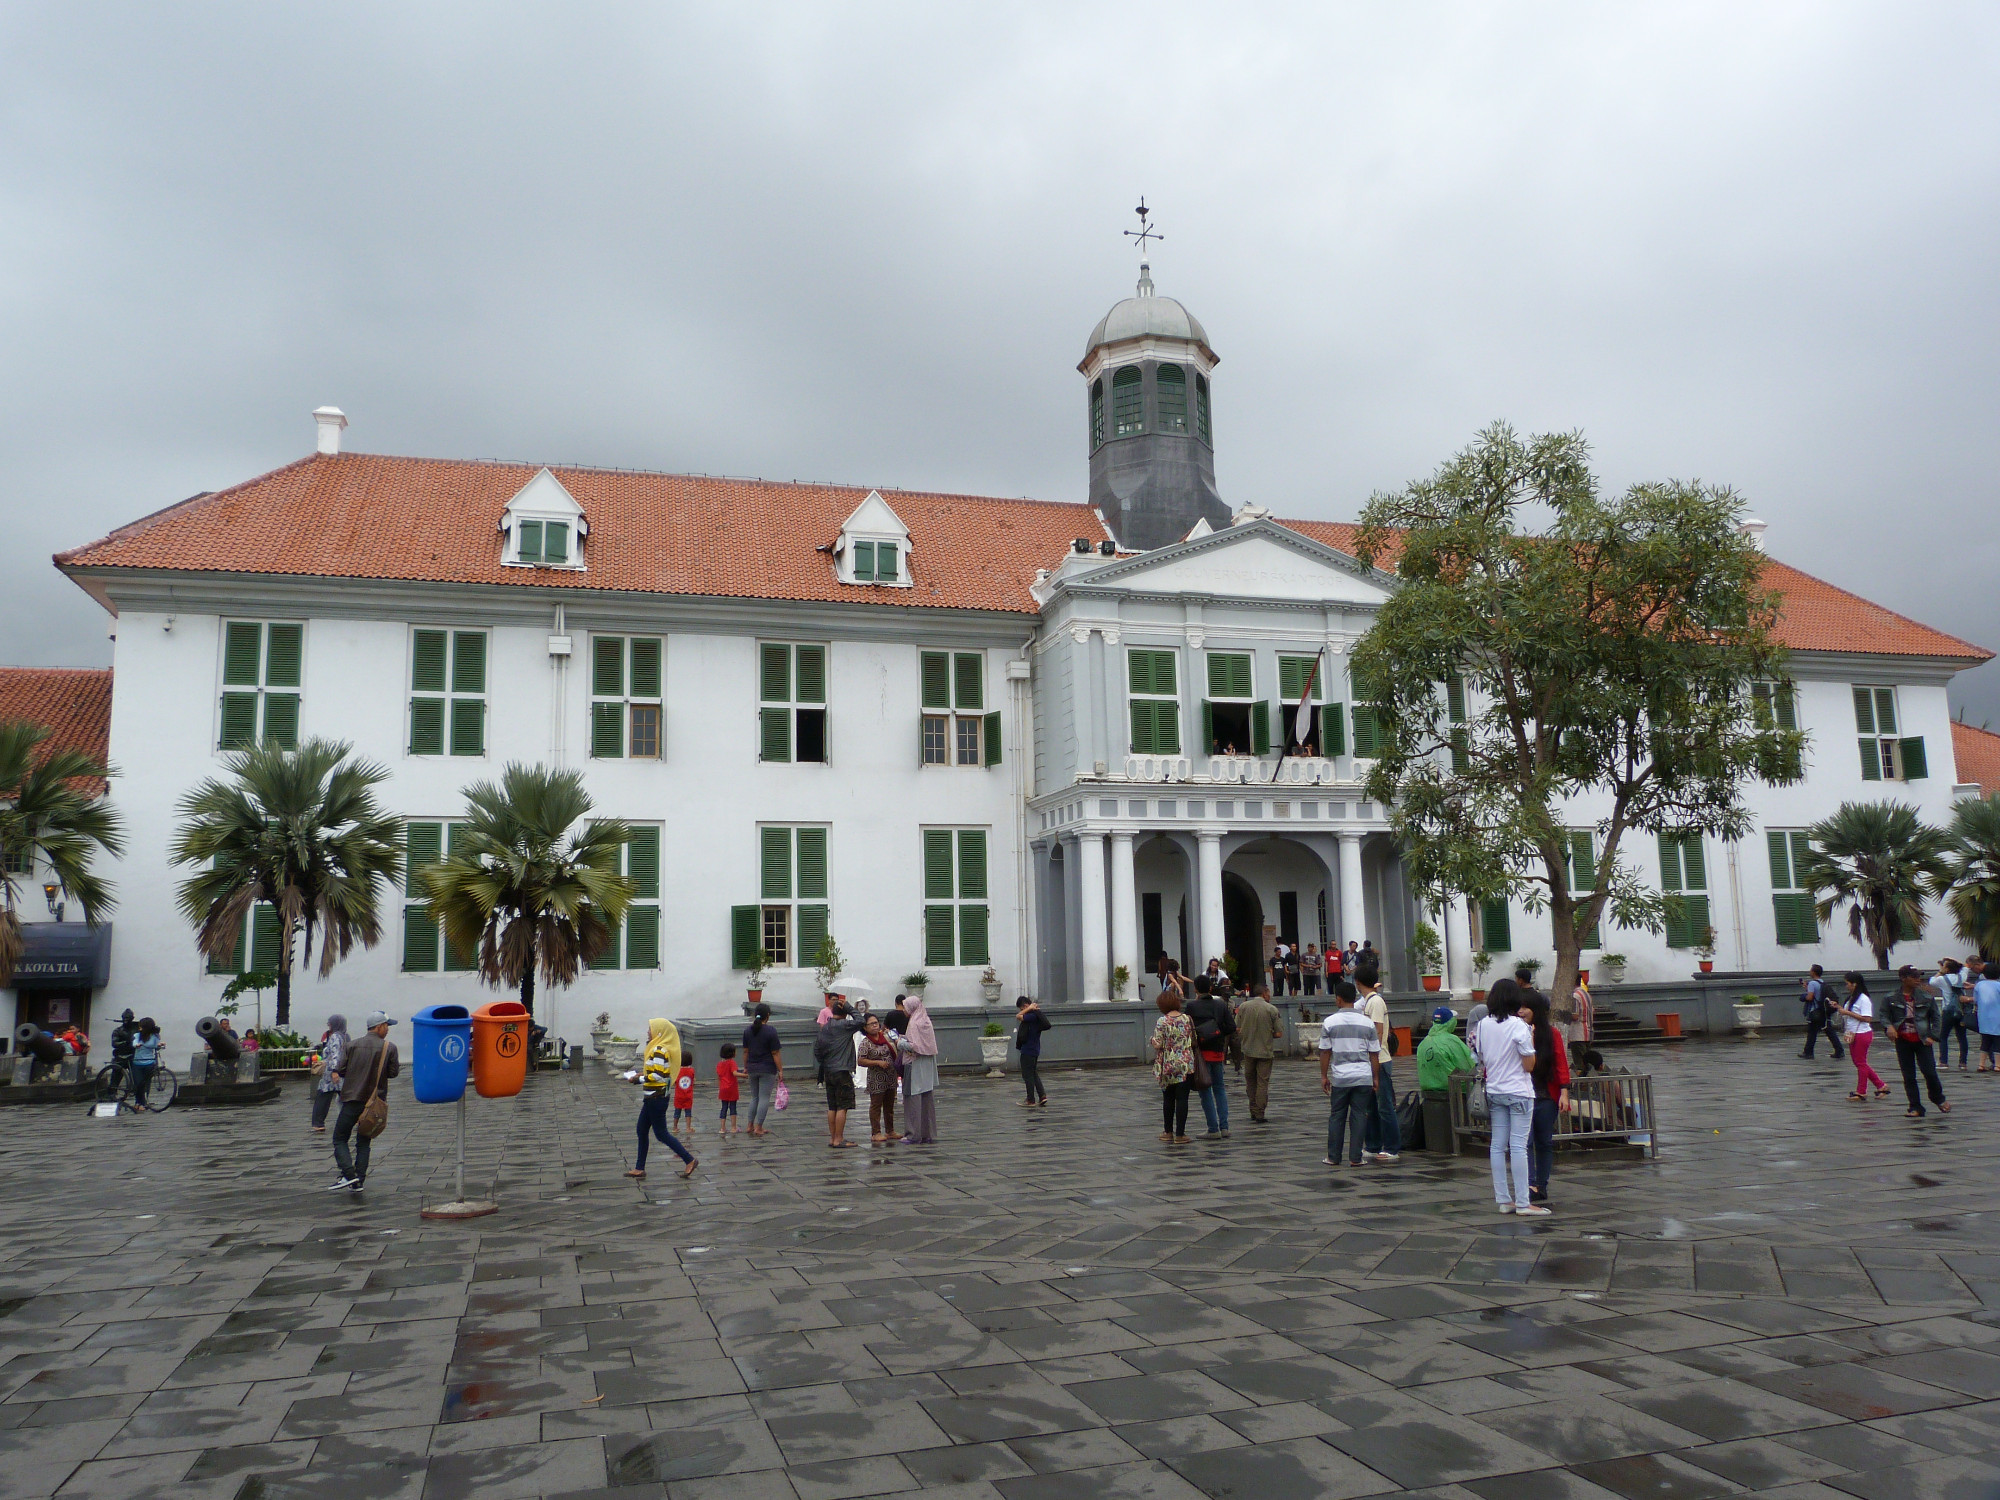 Jakarta History Museum <br/>
Dutch Colonial Centre